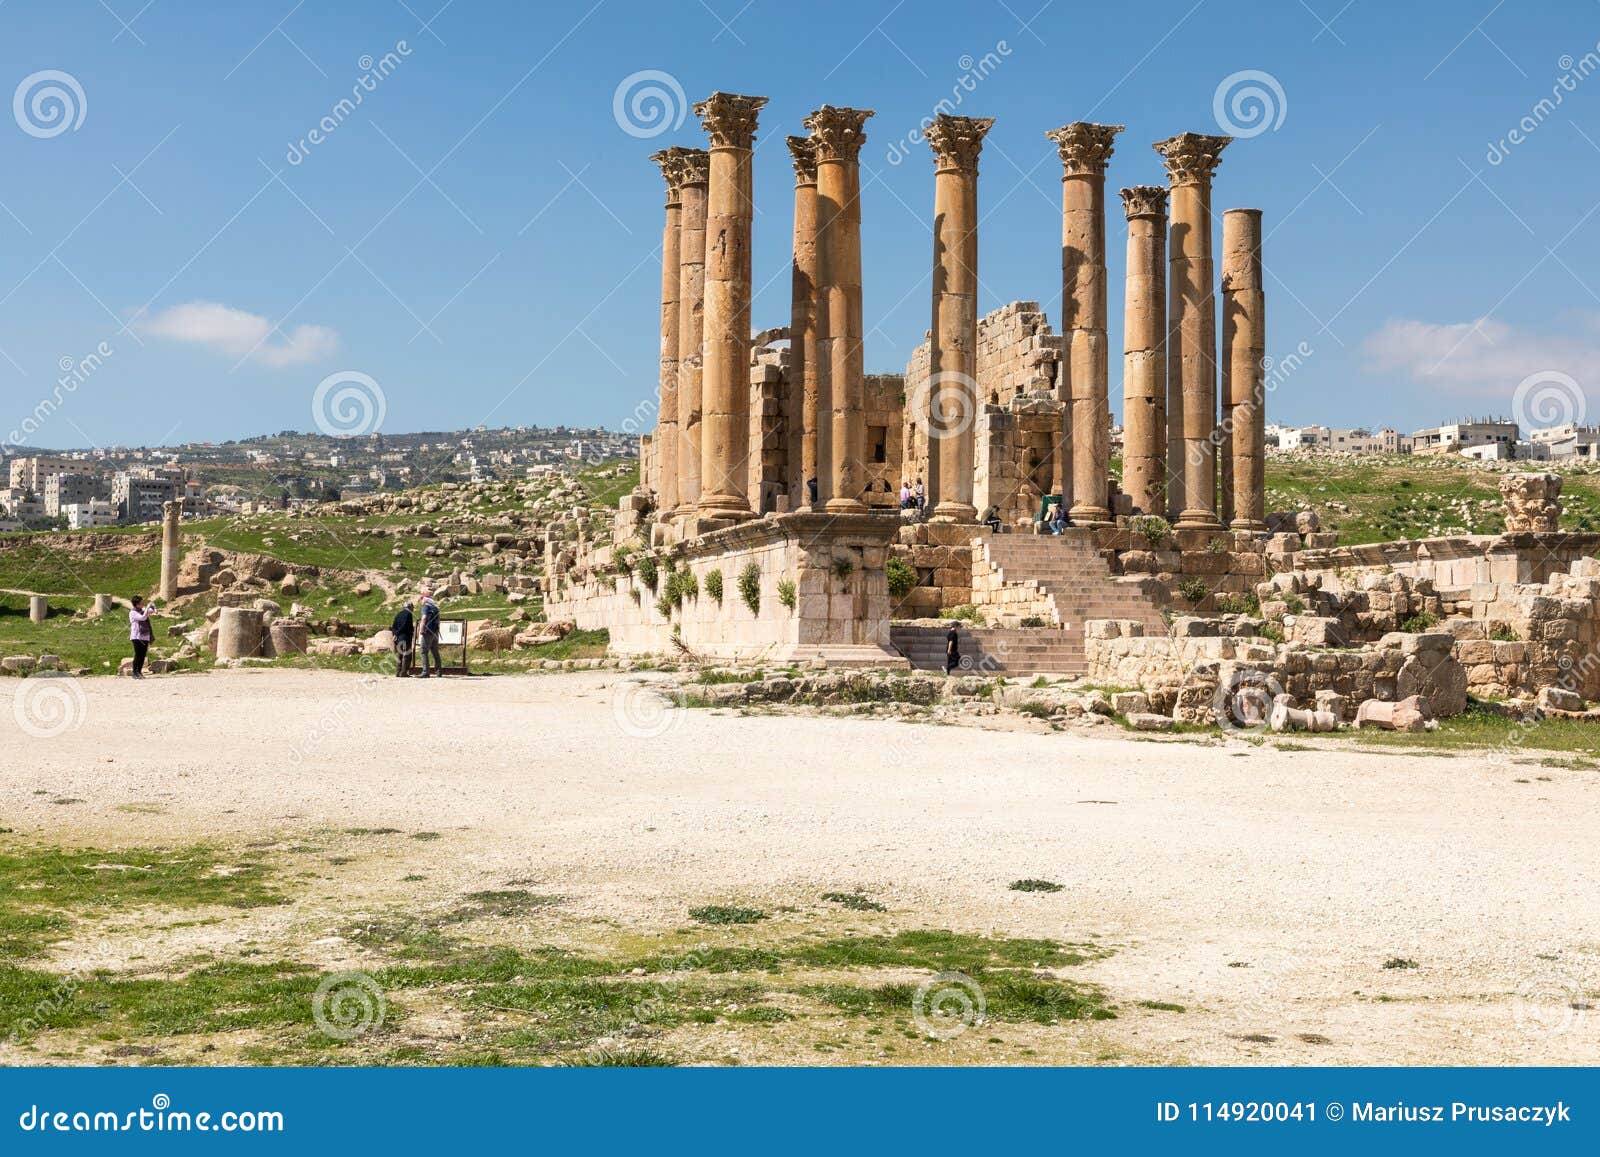 temple of artemis in the ancient roman city of gerasa, jerash, j